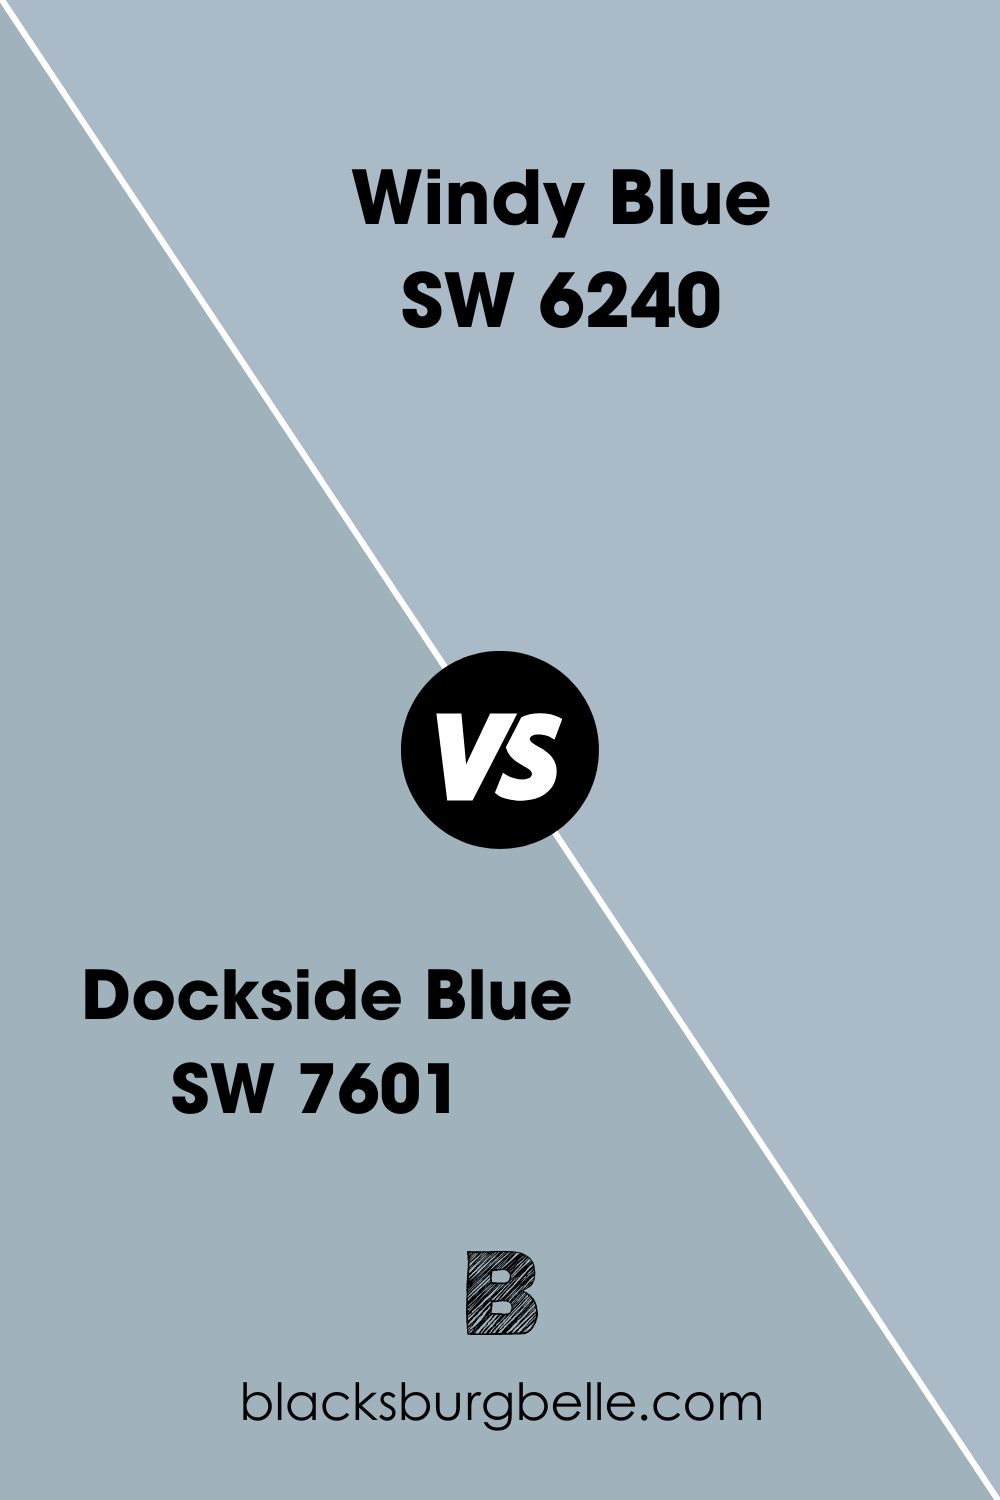 Windy Blue SW 6240 (7)